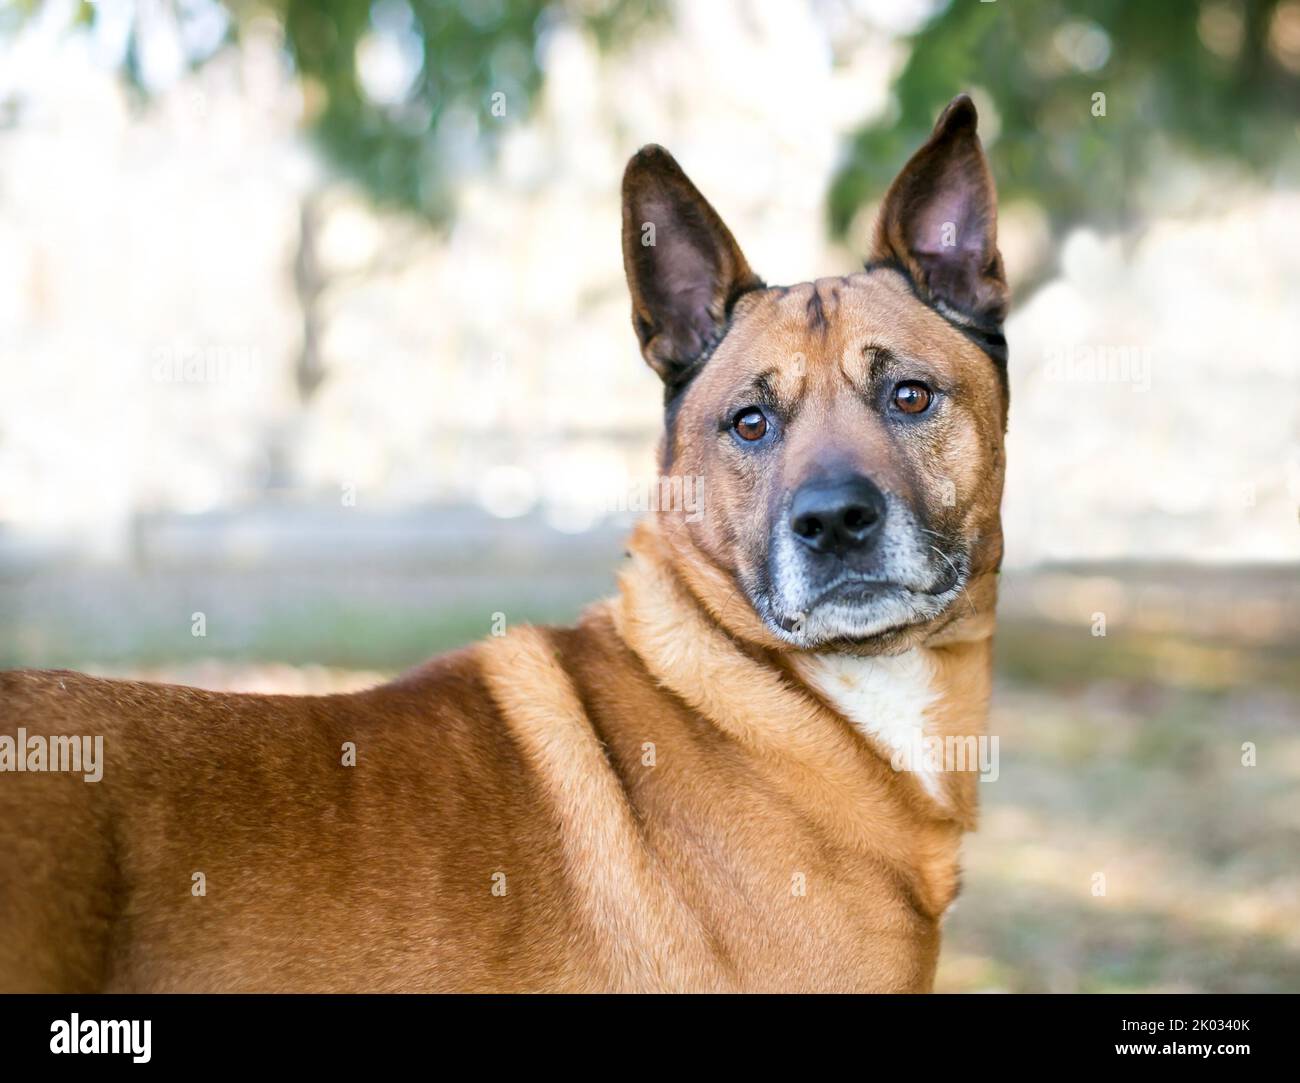 A German Shepherd mixed breed dog looking alert outdoors Stock Photo